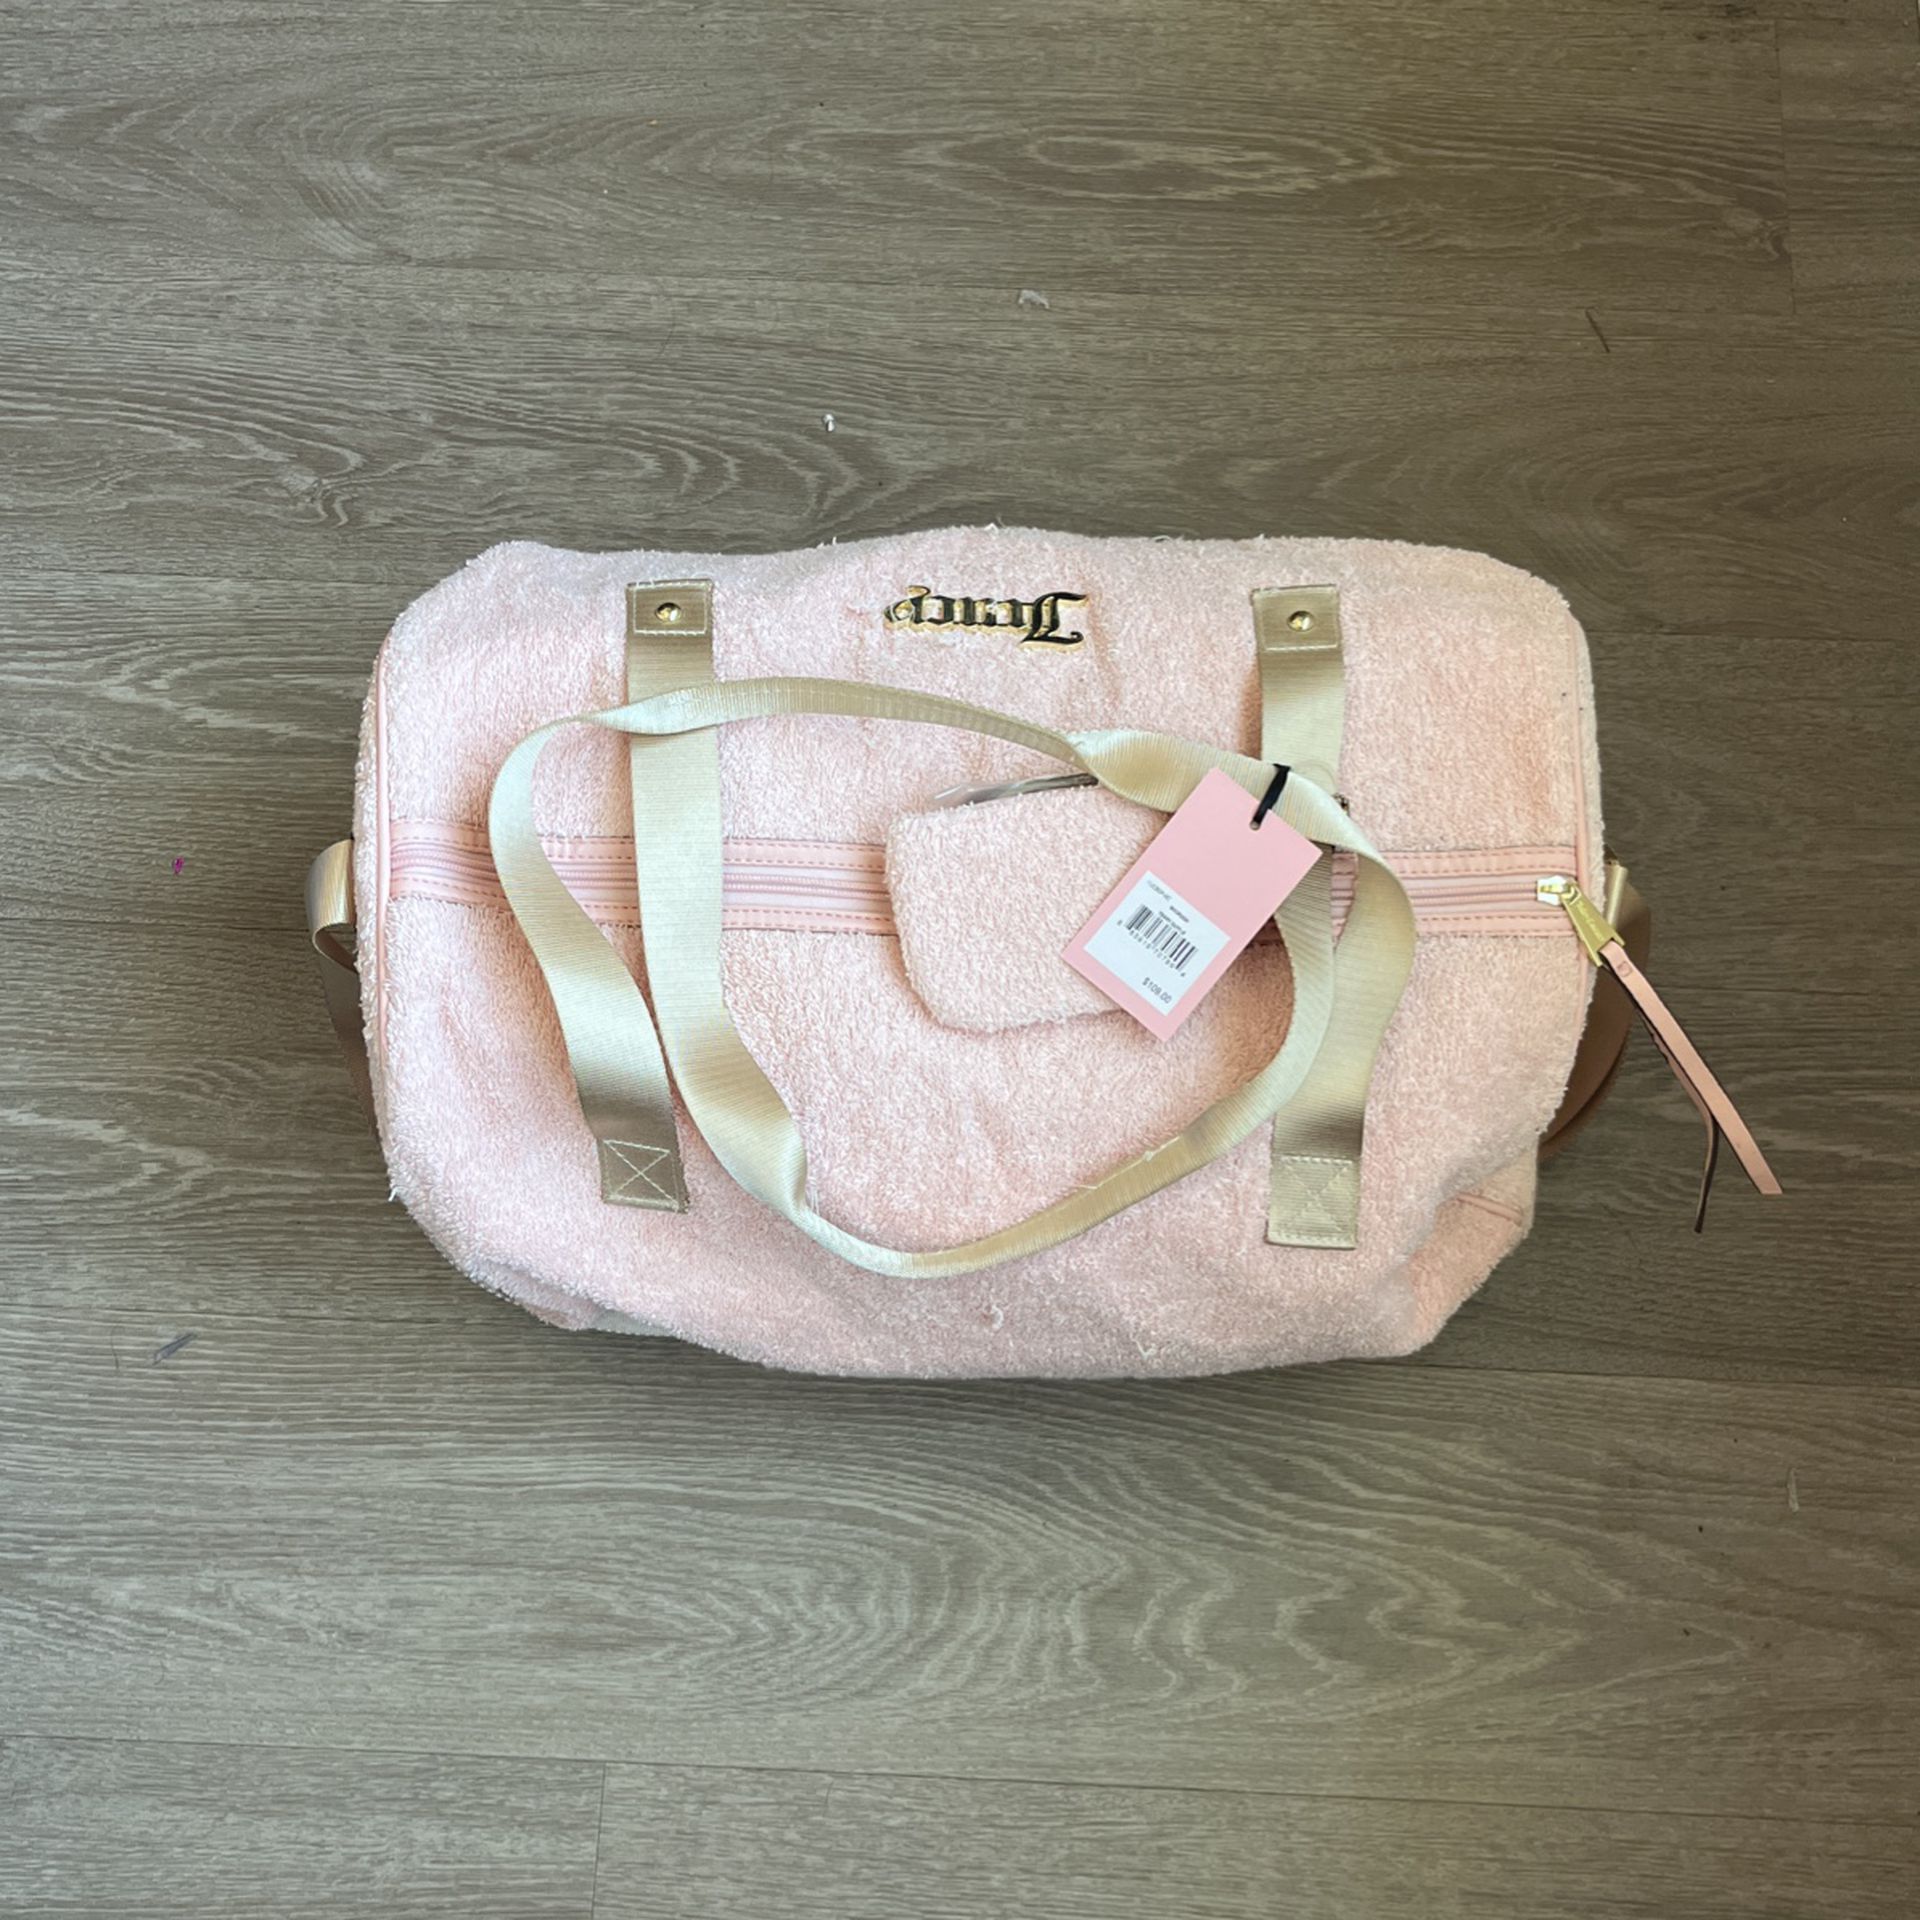 Juicy Couture pink bag